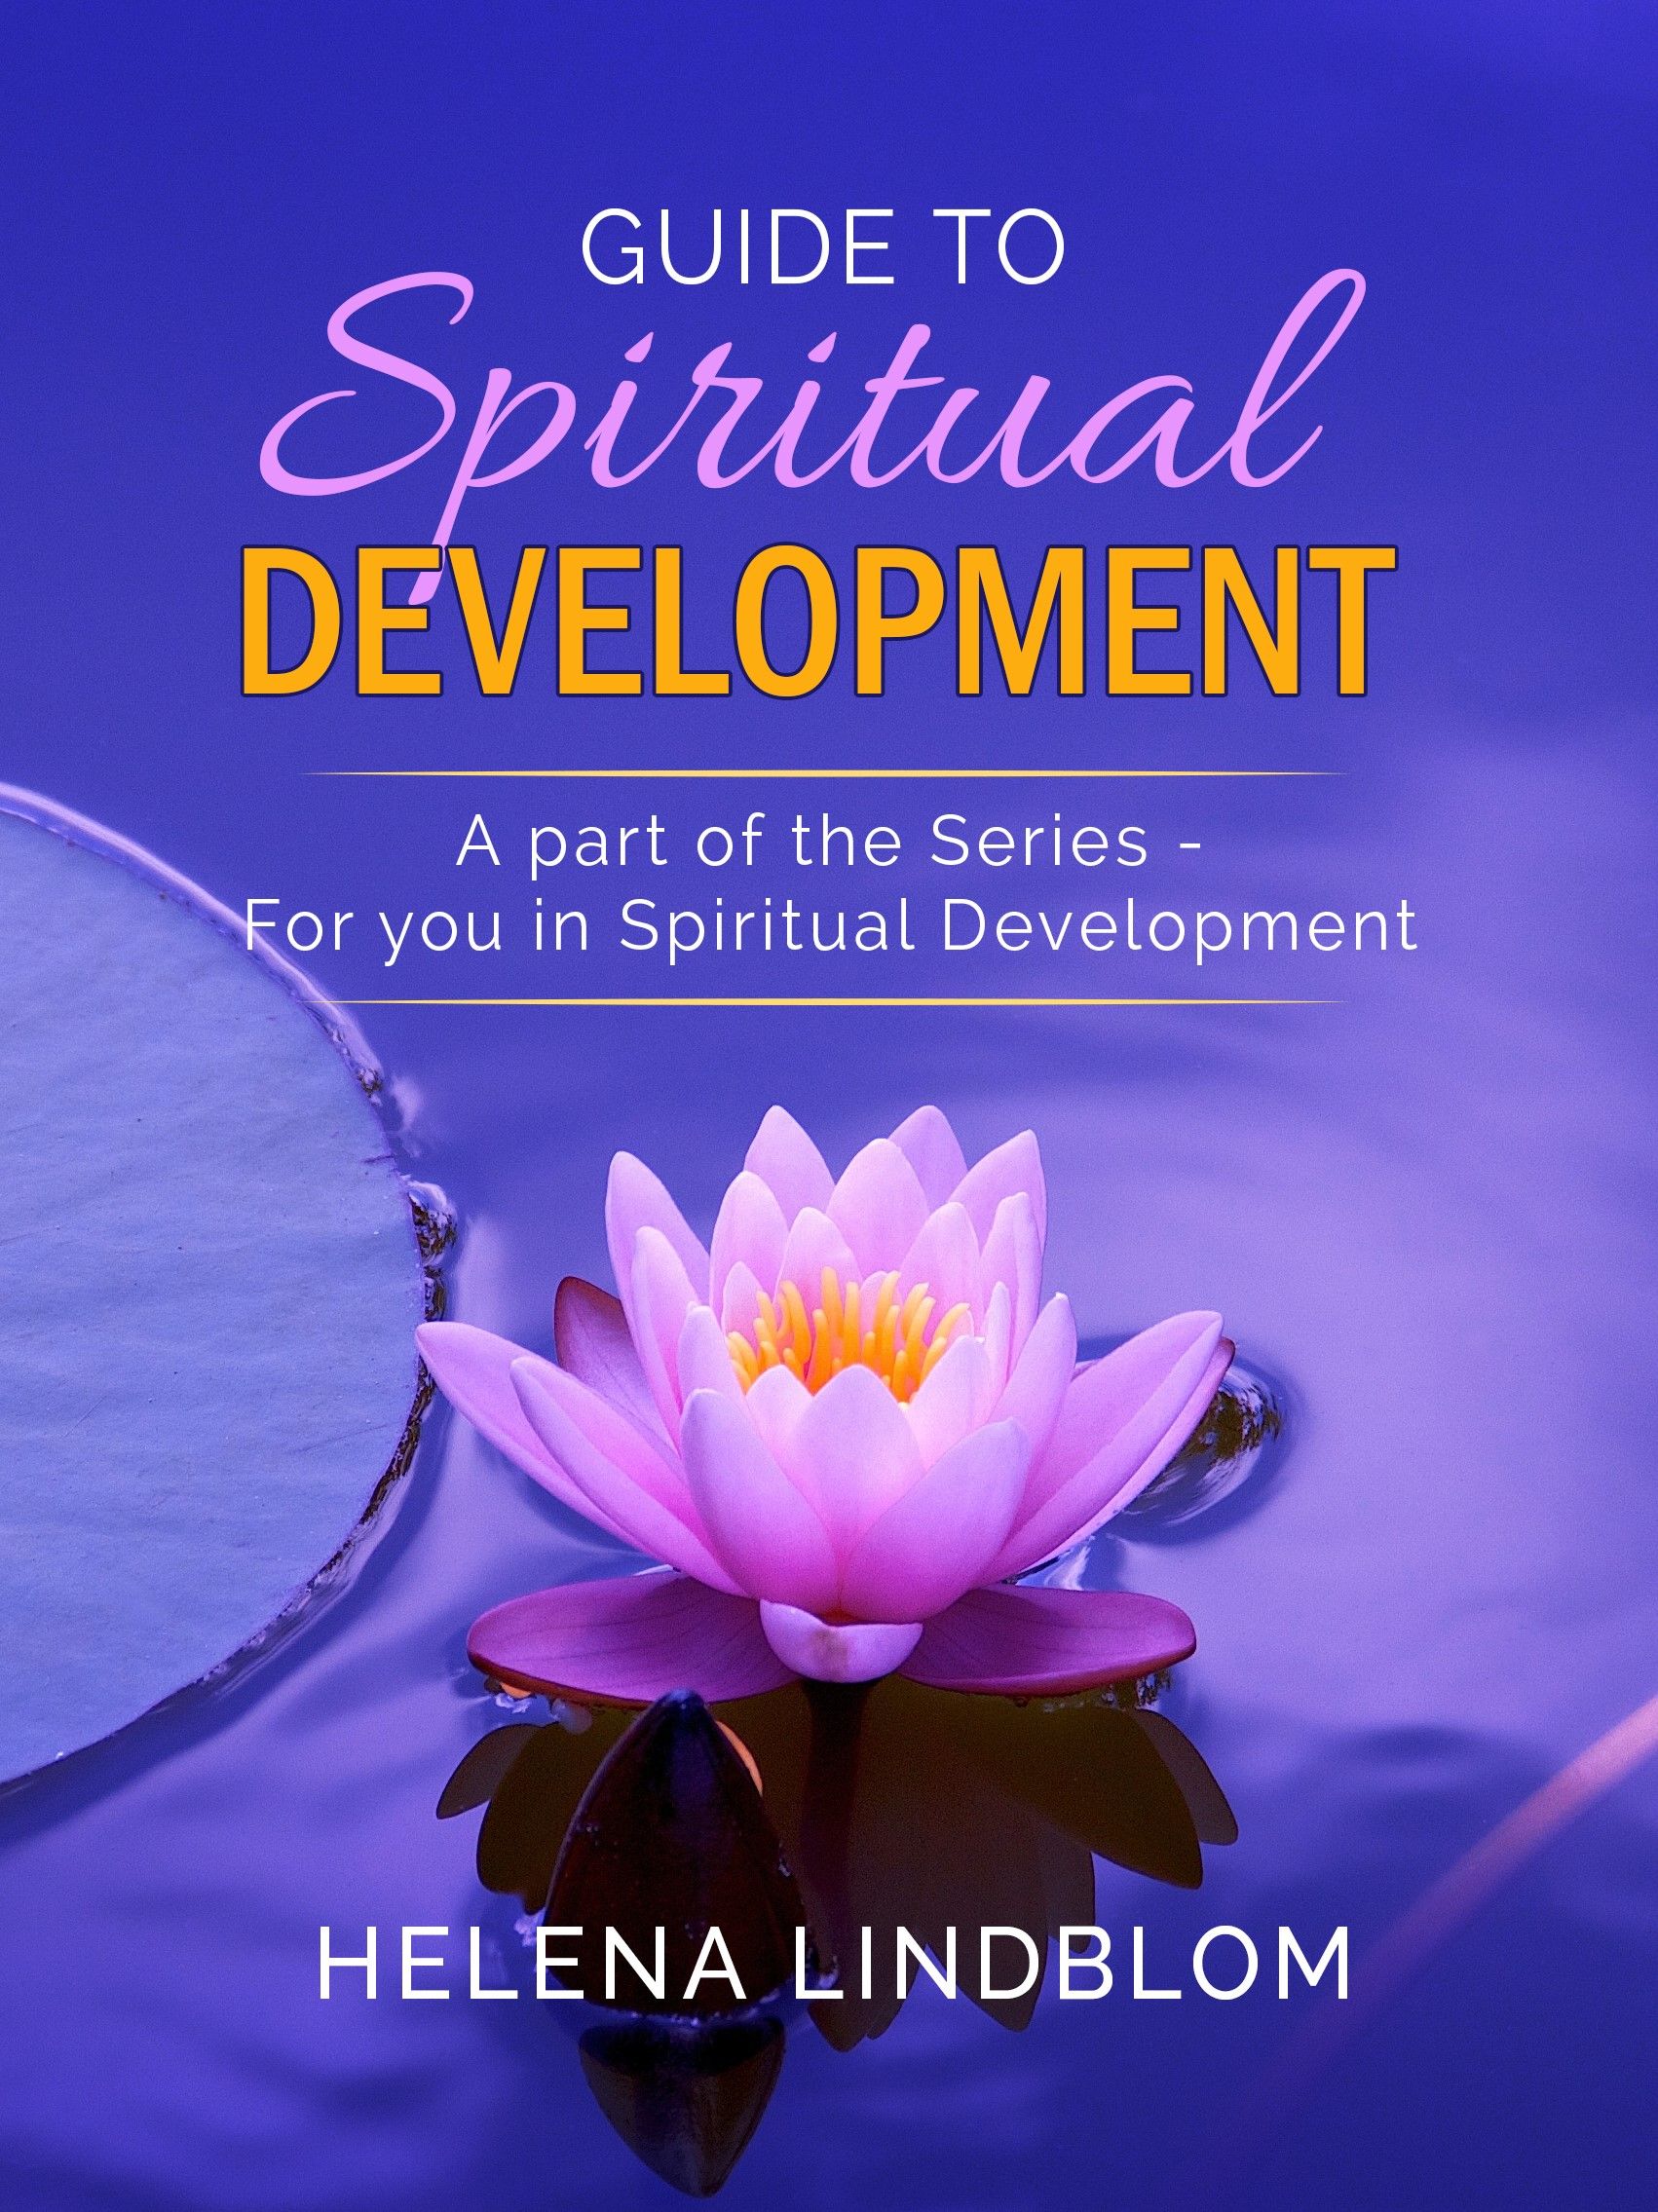 Guide to Spiritual Development, lydbog af Helena Lindblom